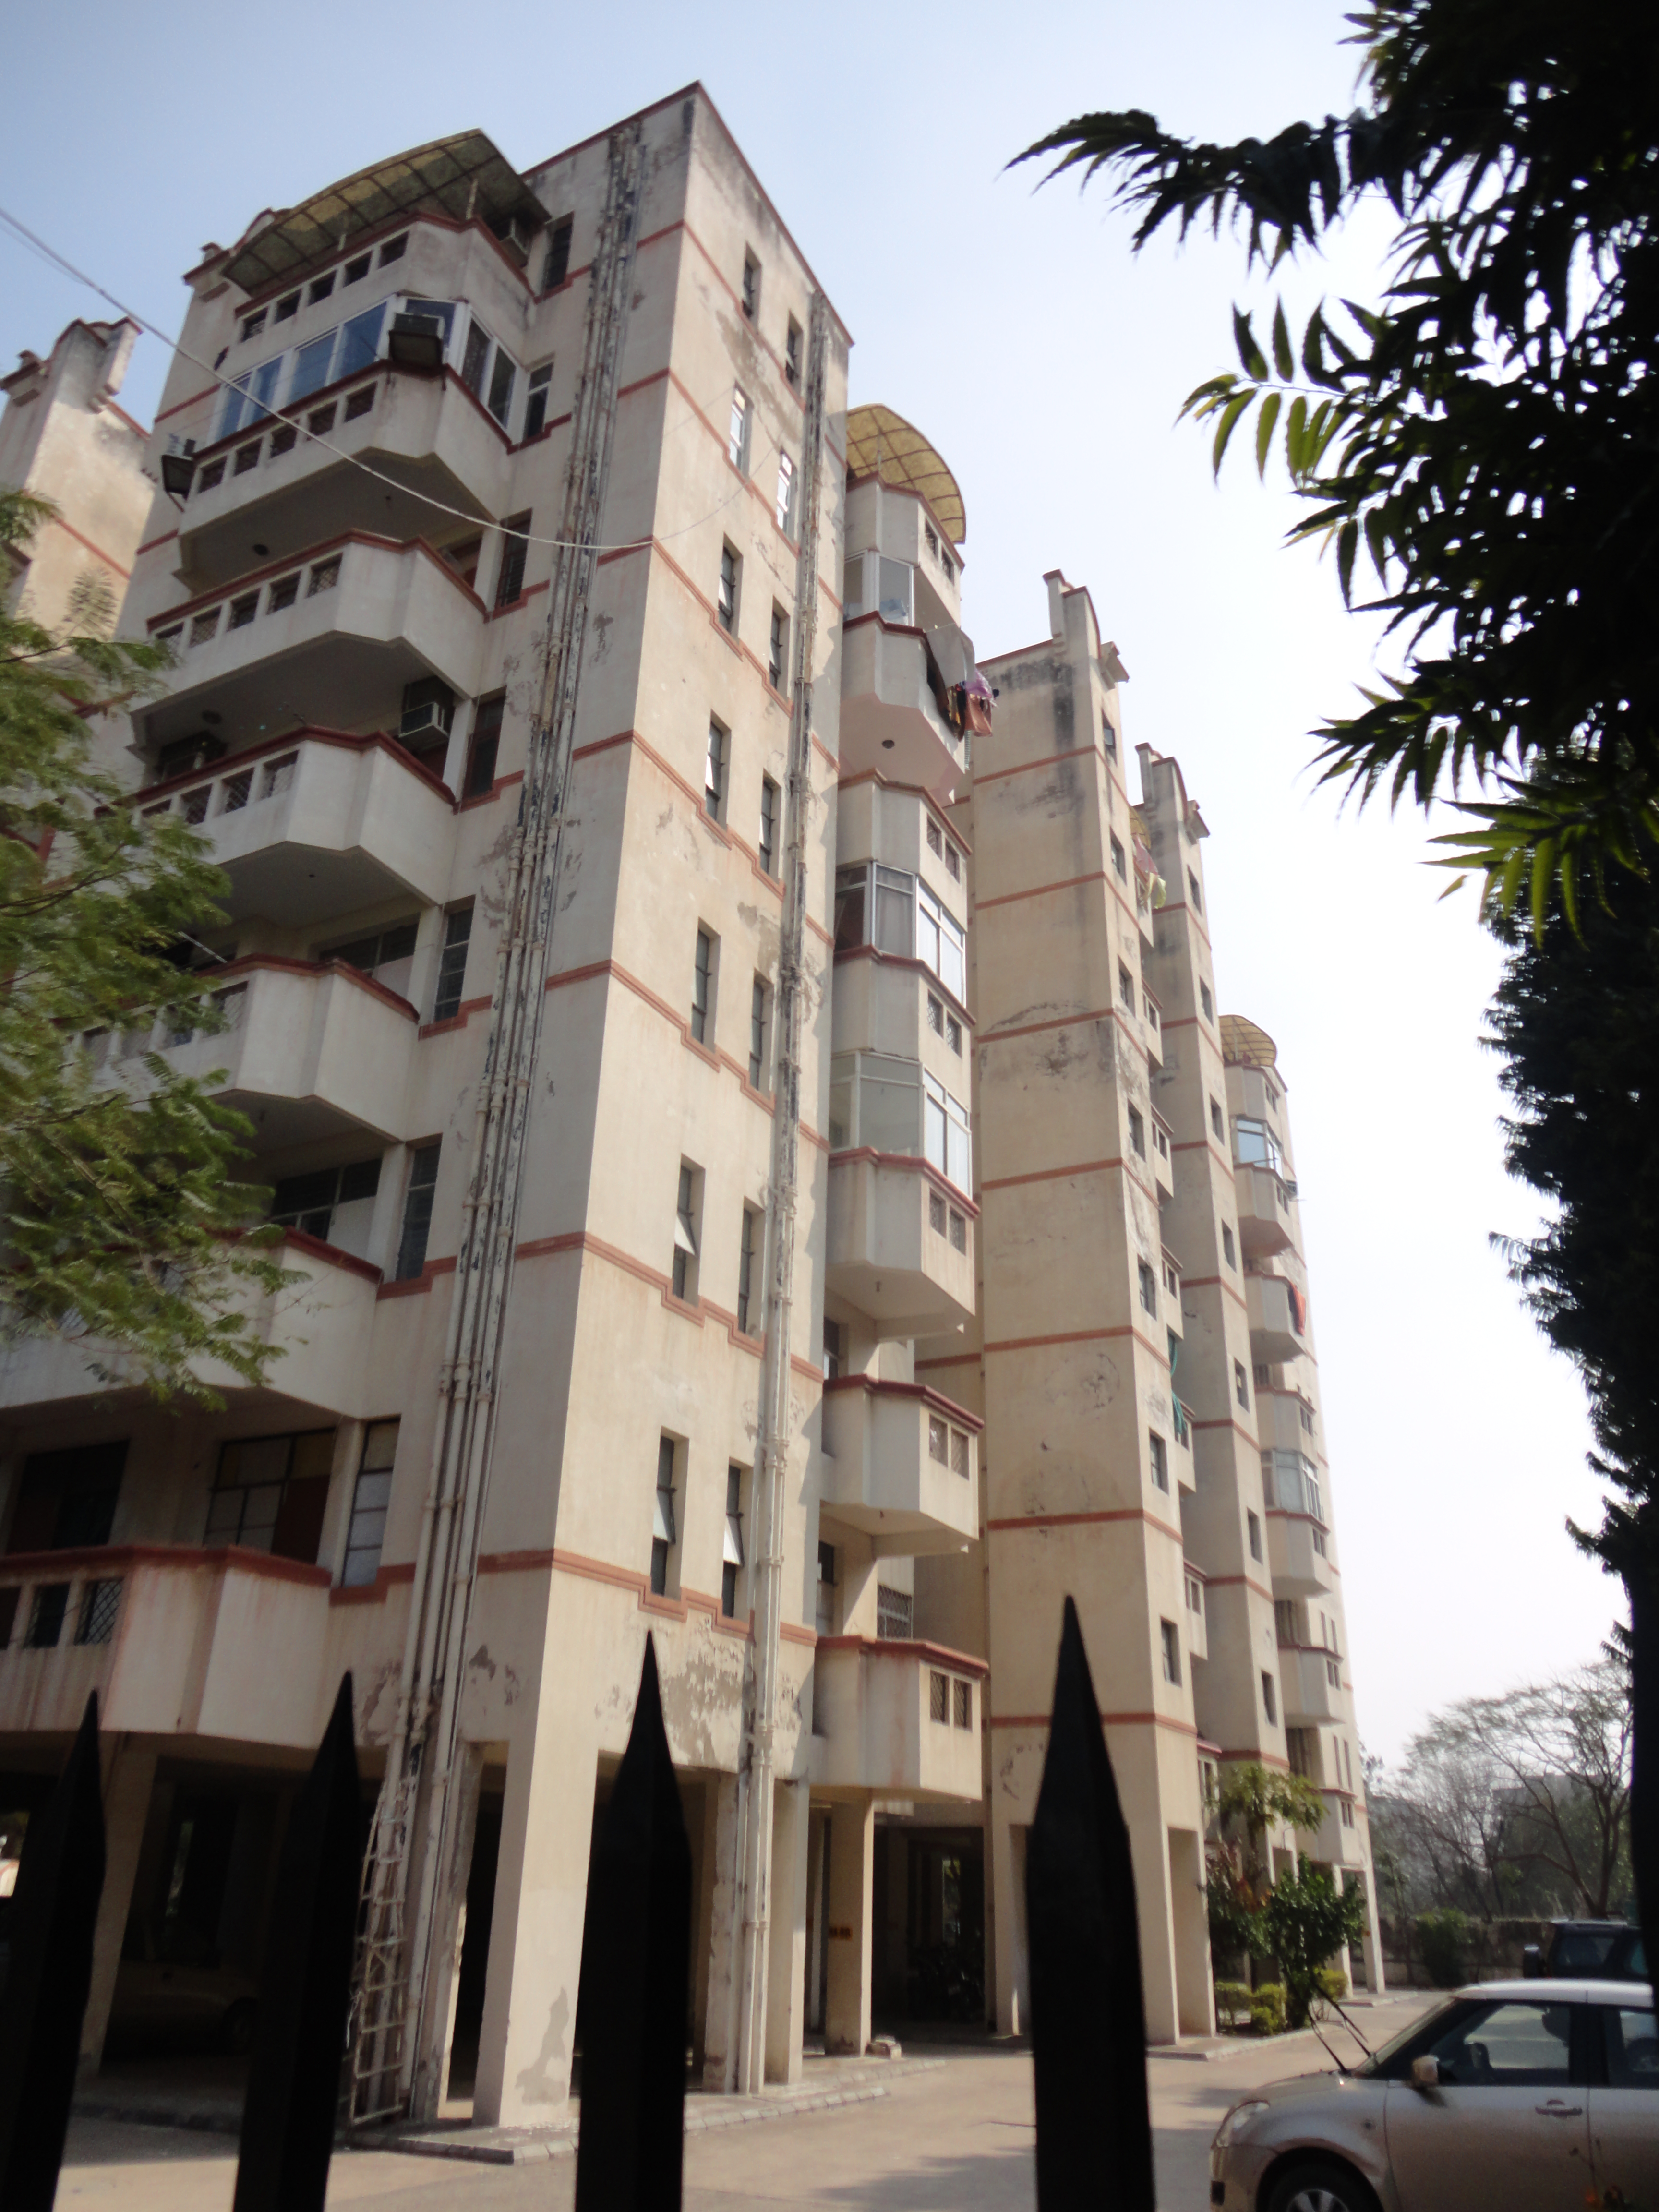 Priyadarshani Apartments CGHS Brochure Pdf Image